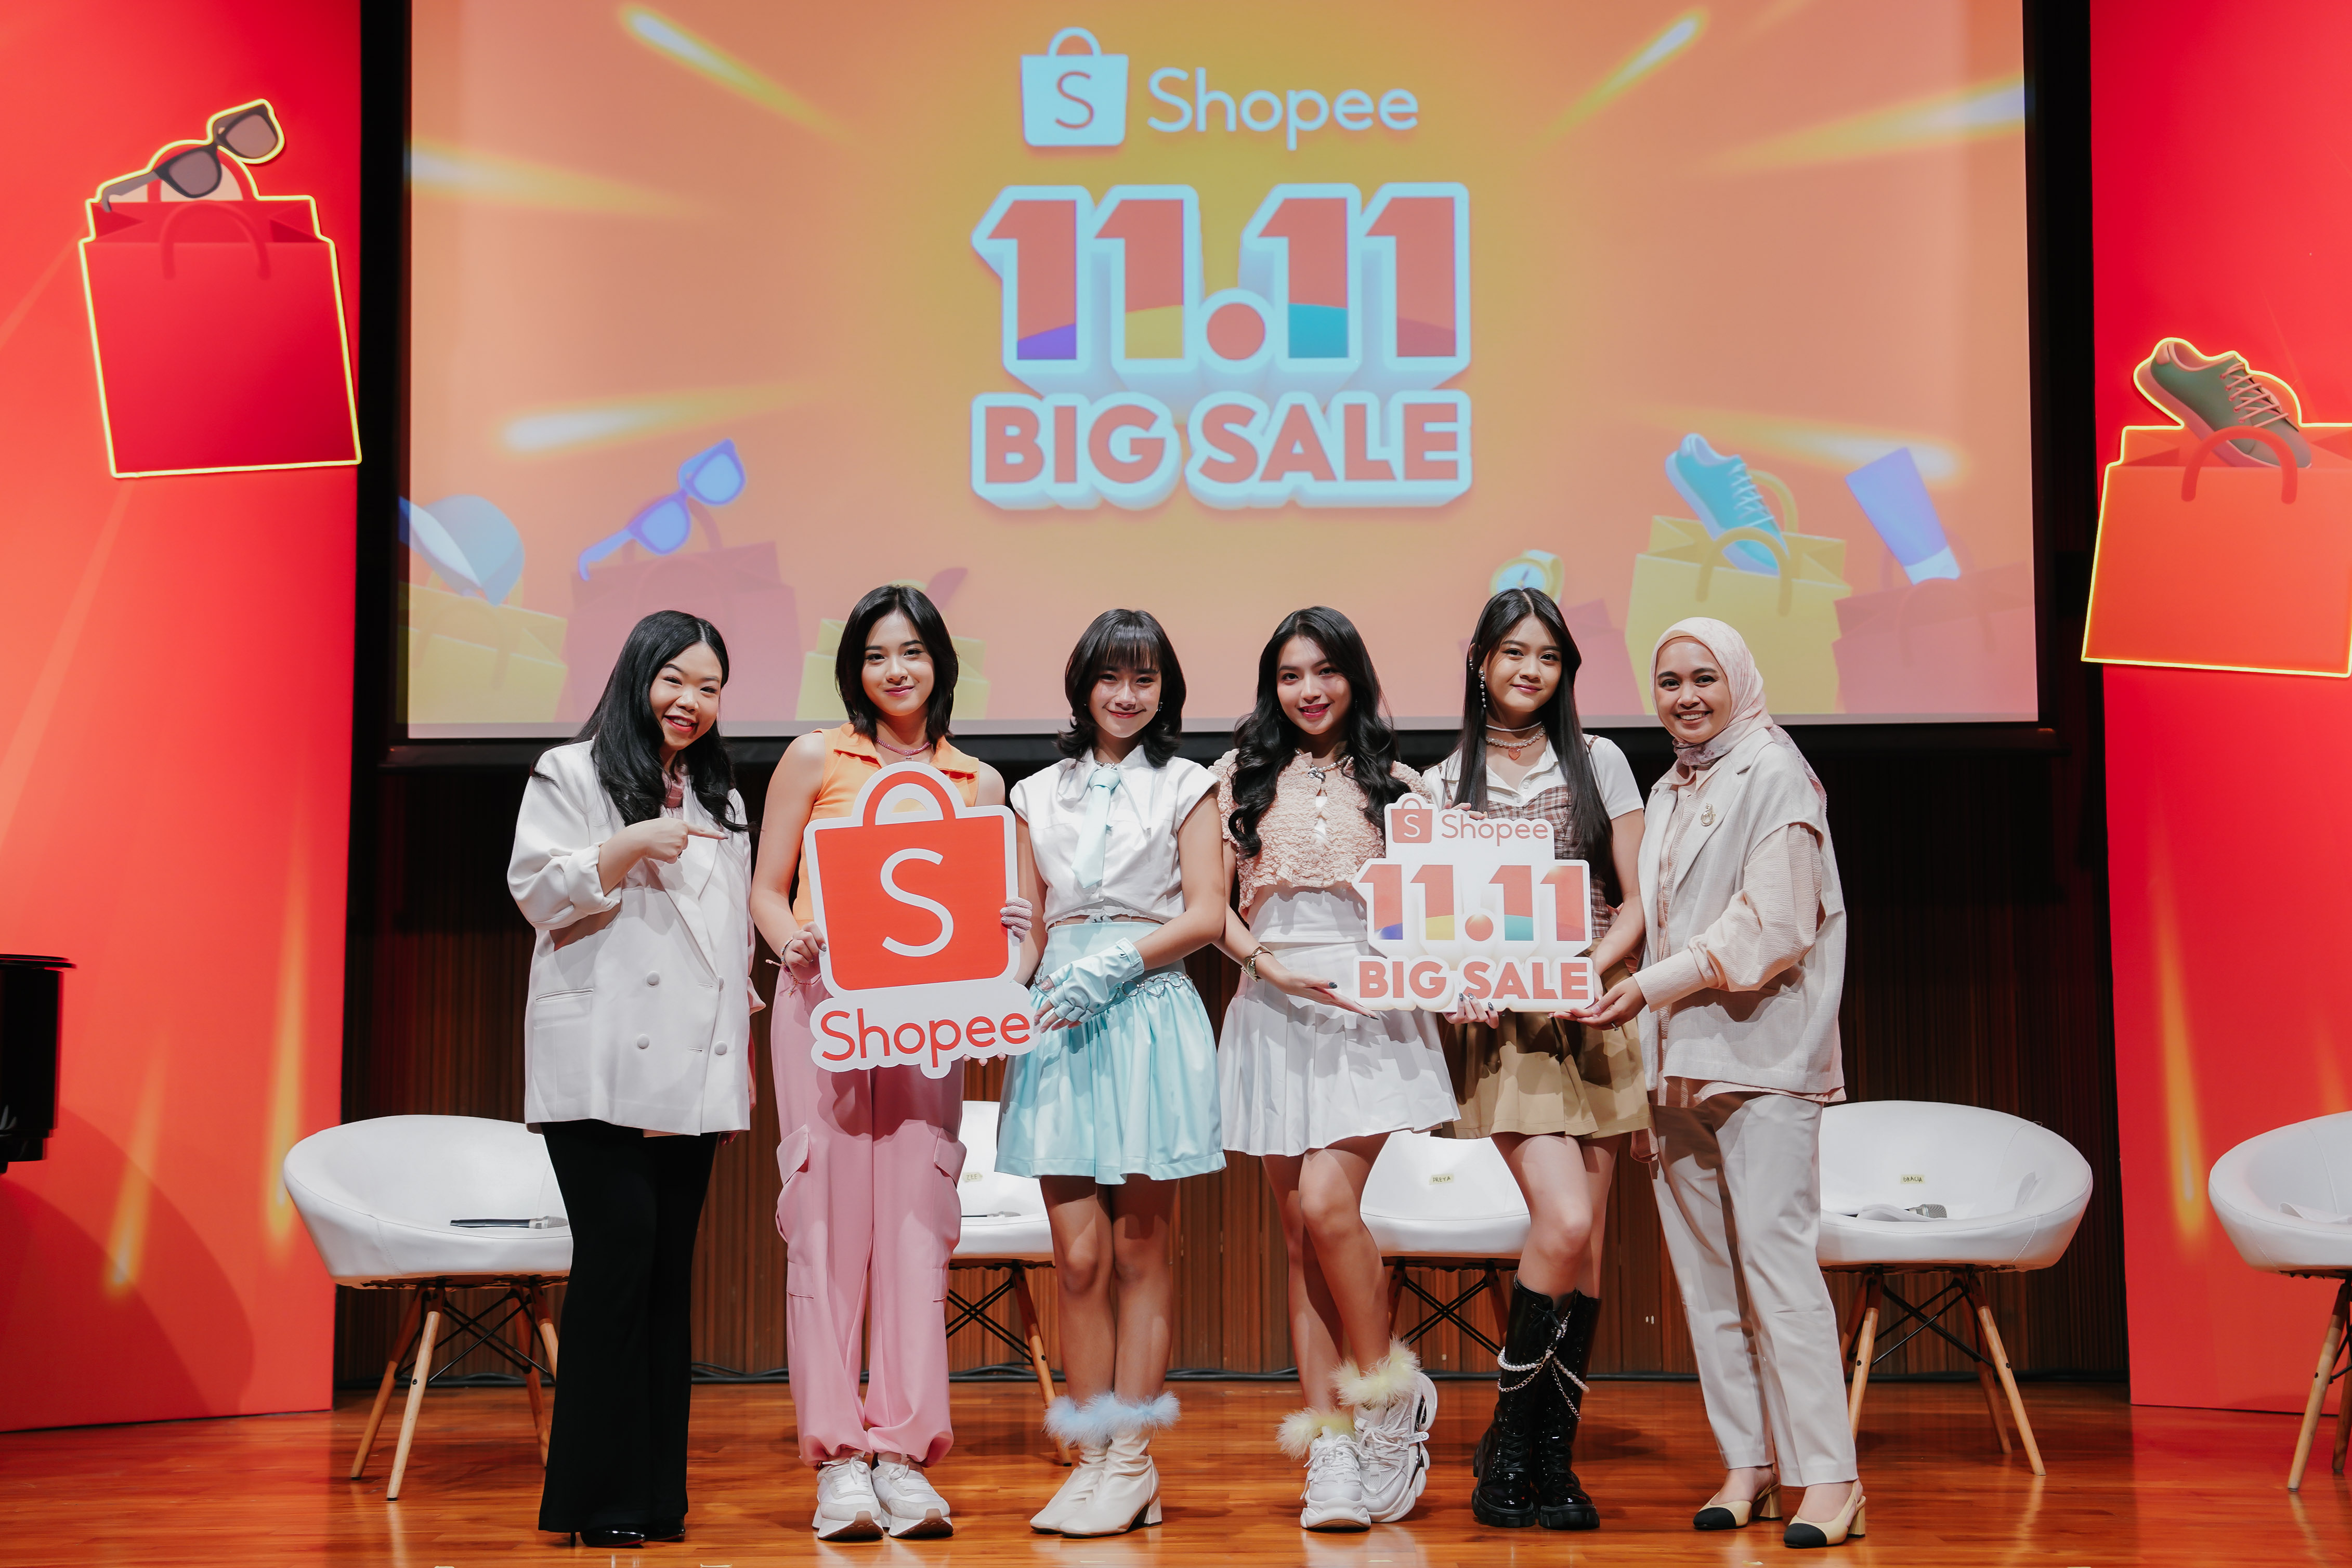 Kemeriahan Shopee 11.11 Big Sale bersama JKT48, Shopee Dorong Transformasi Bisnis Brand Lokal & UMKM